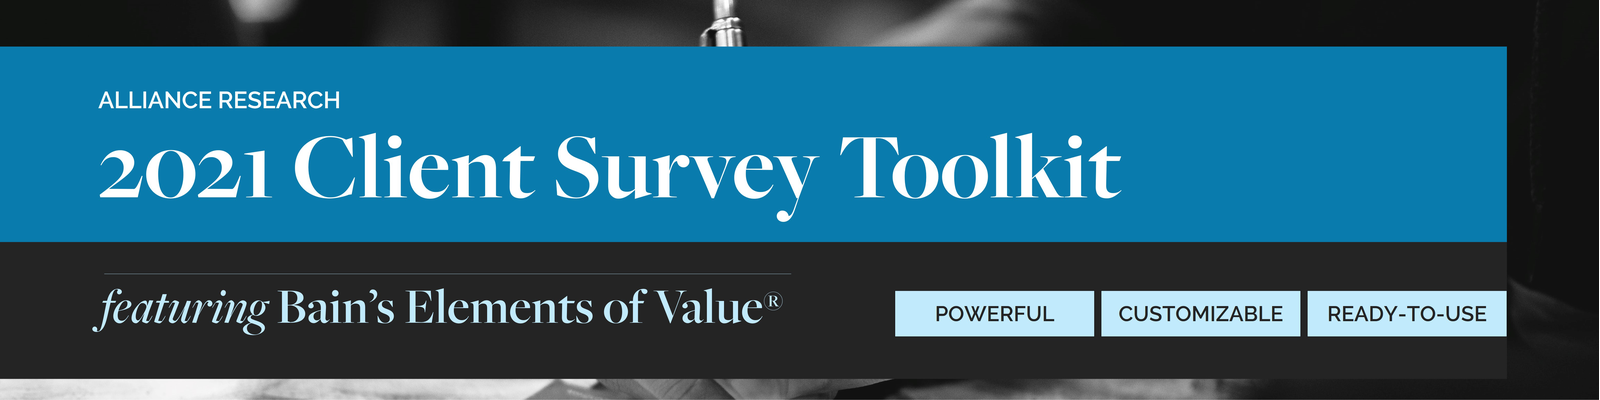 FWA Client Survey Toolkit